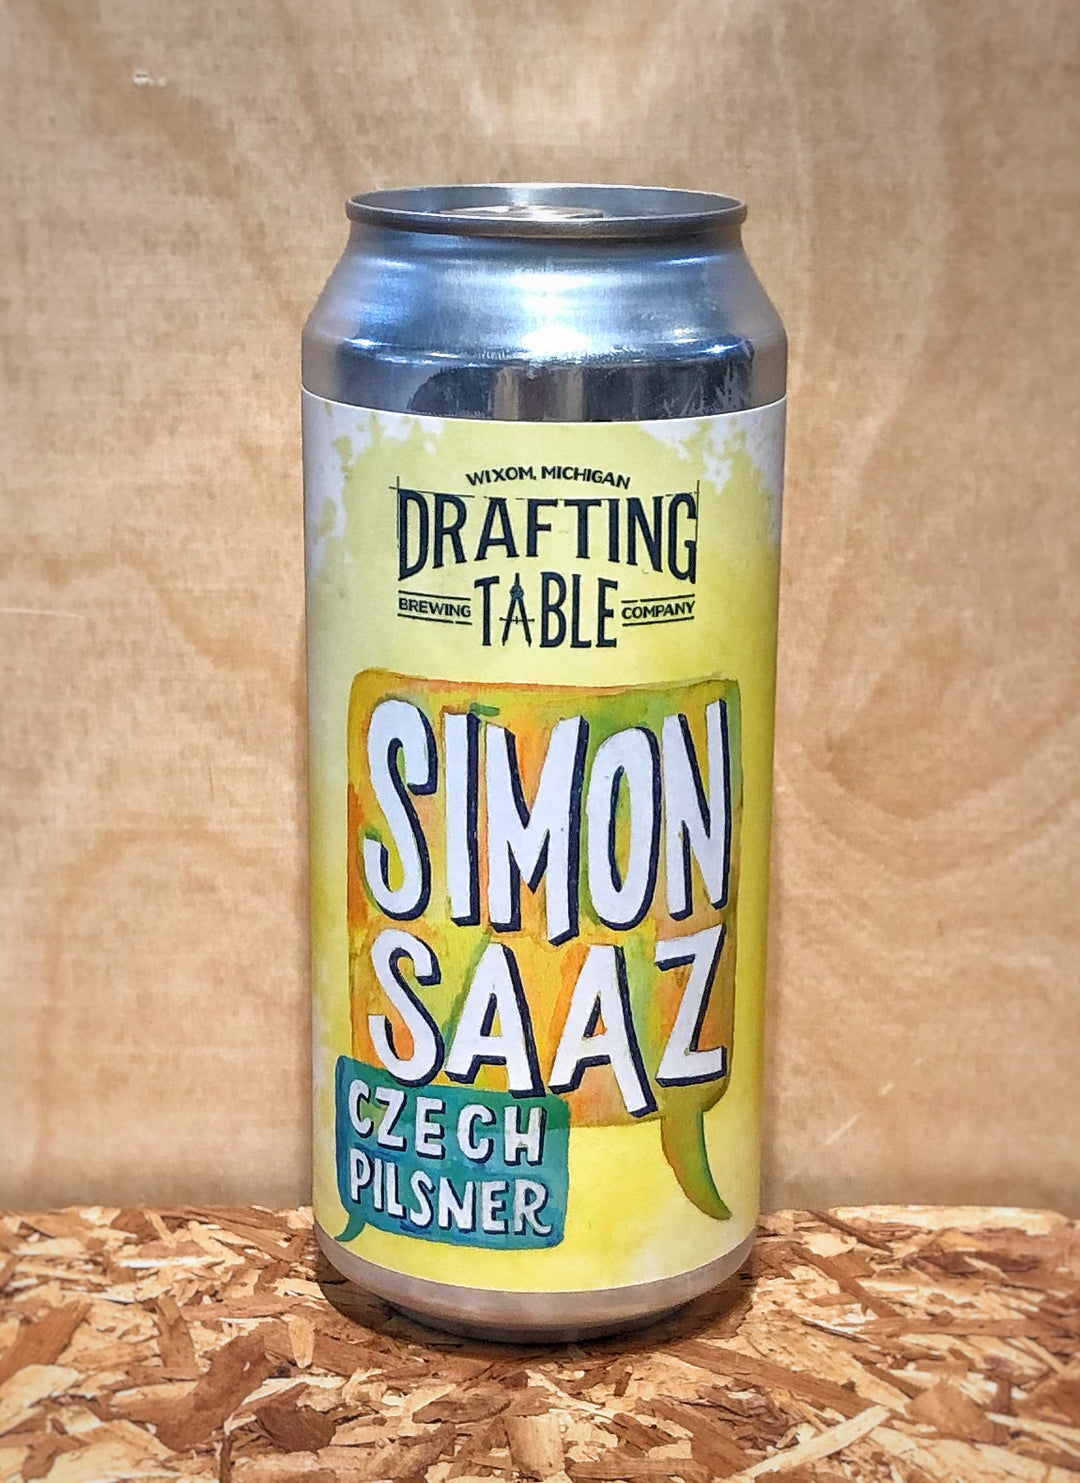 Drafting Table 'Simon Saaz' Czech Pilsner (Wixom, MI)